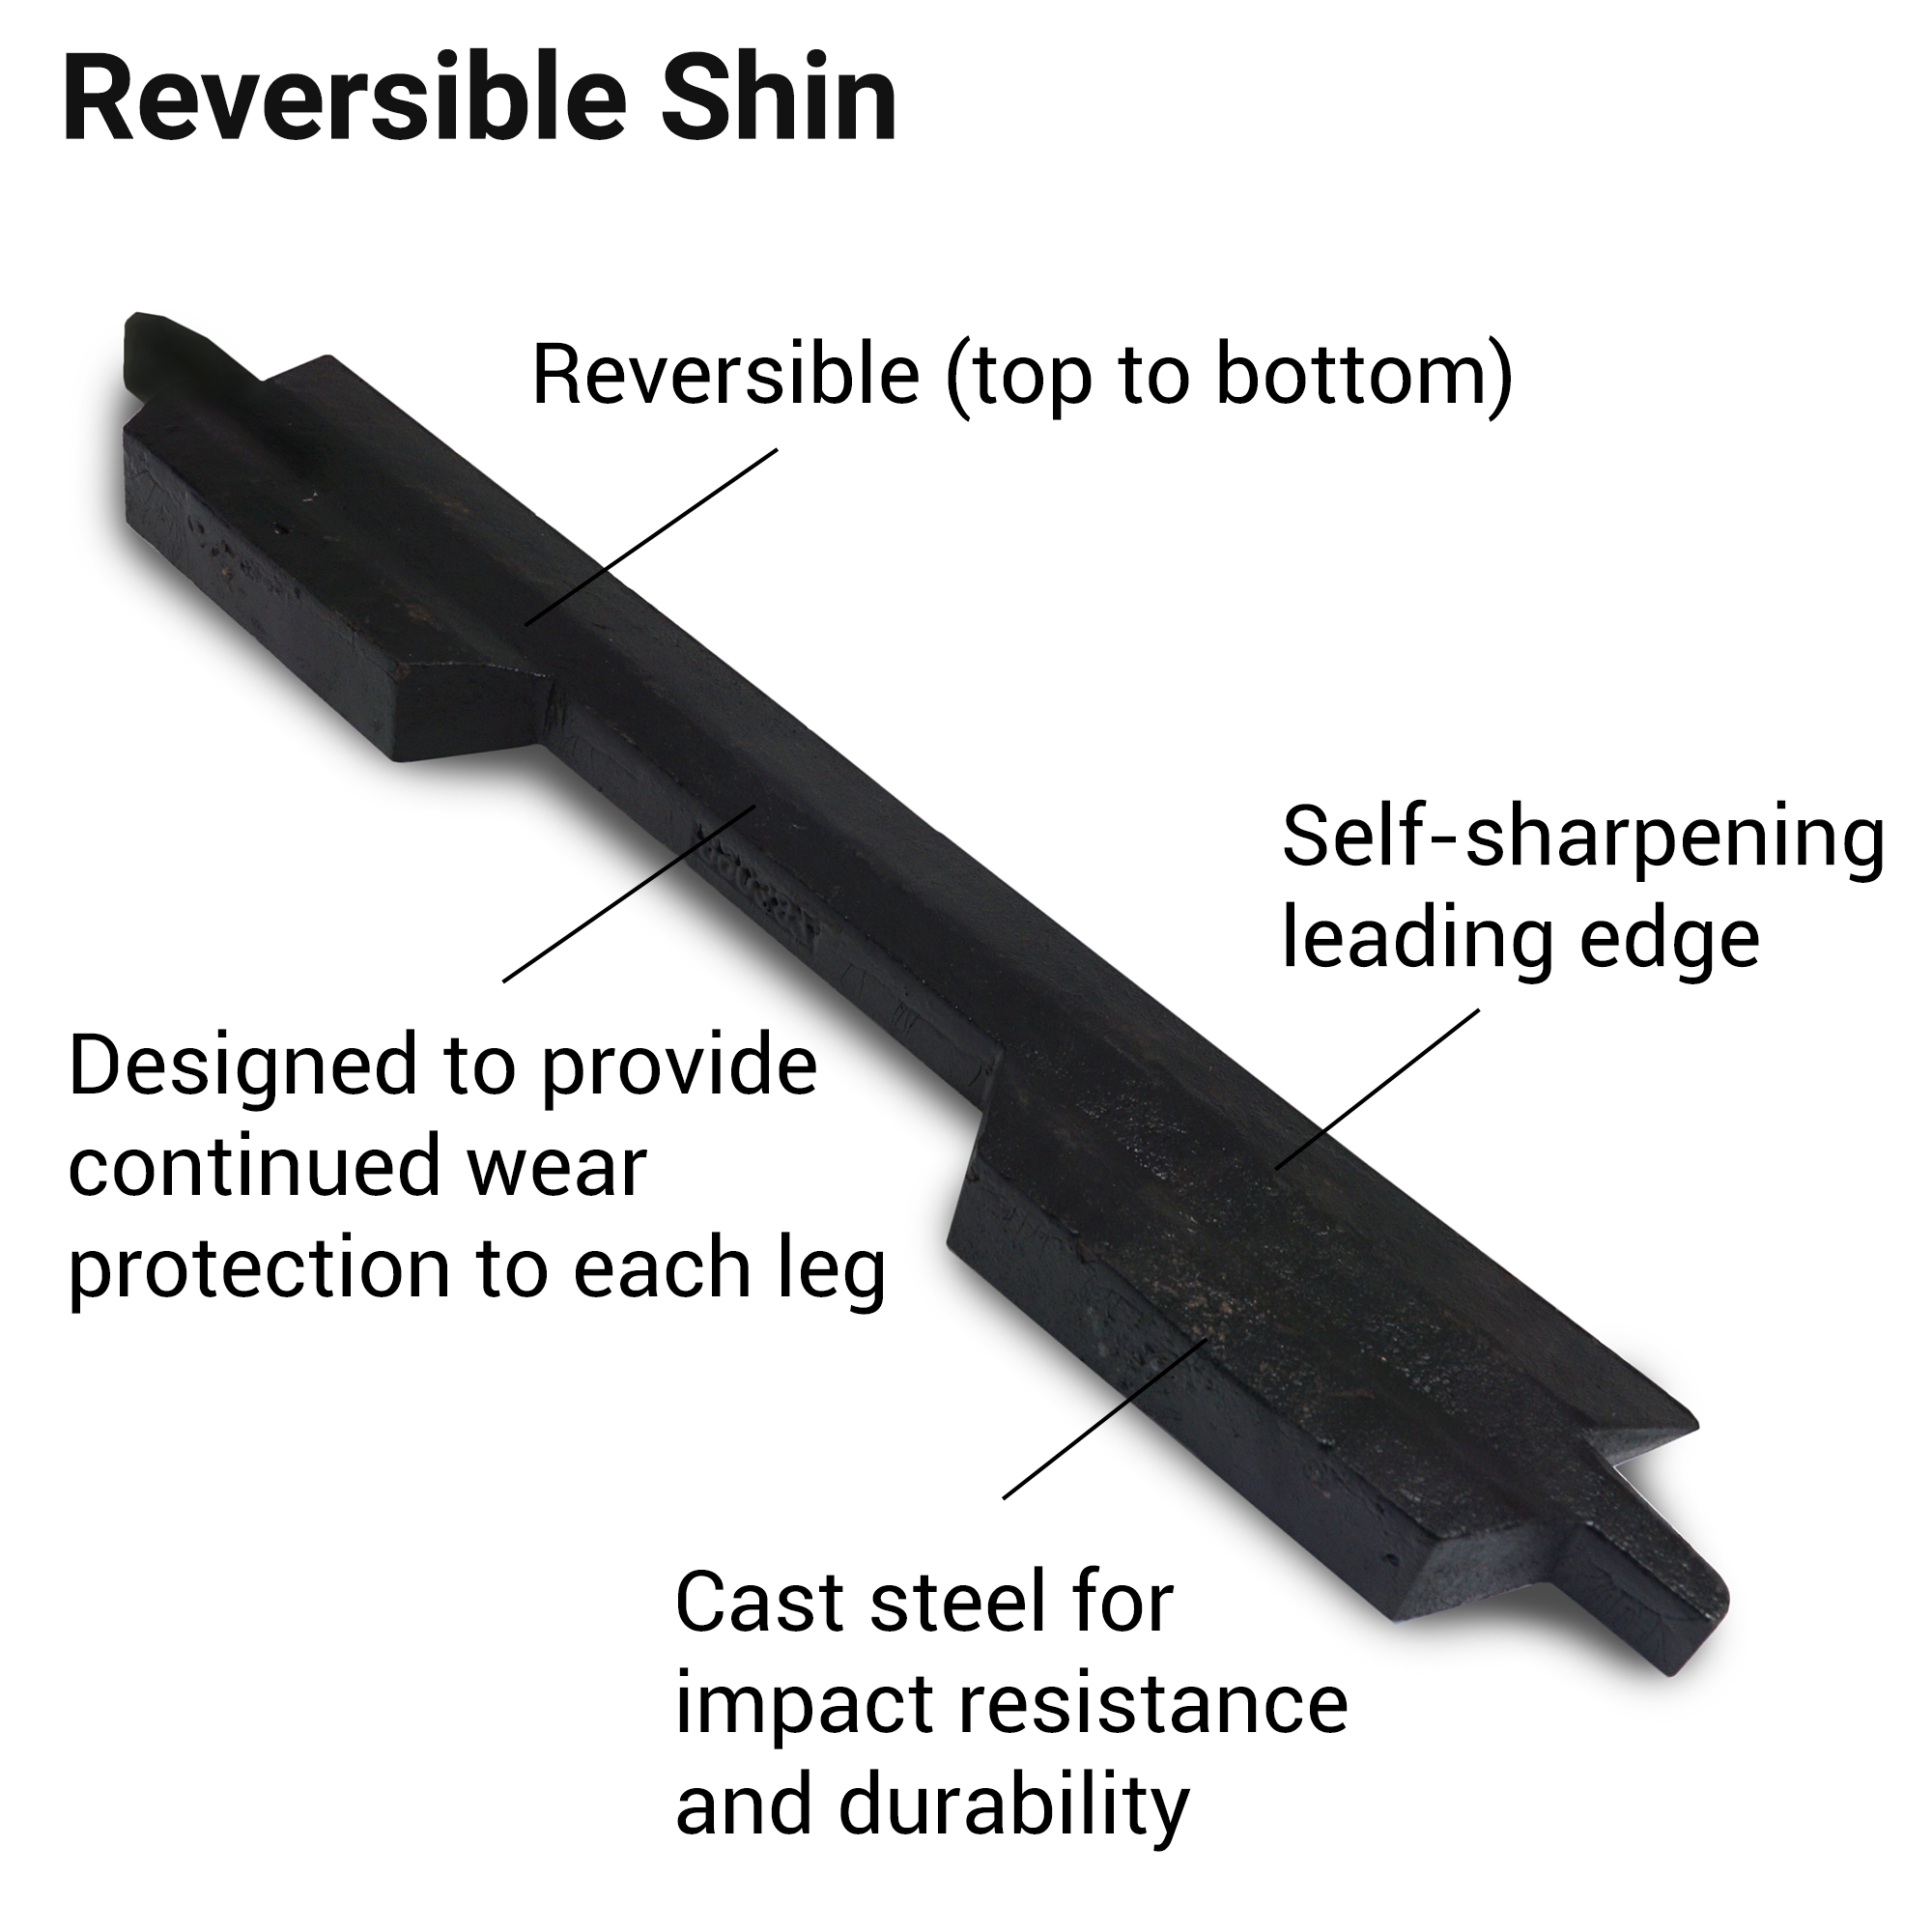 OPICO Sward Lifter Reversible Shin key features